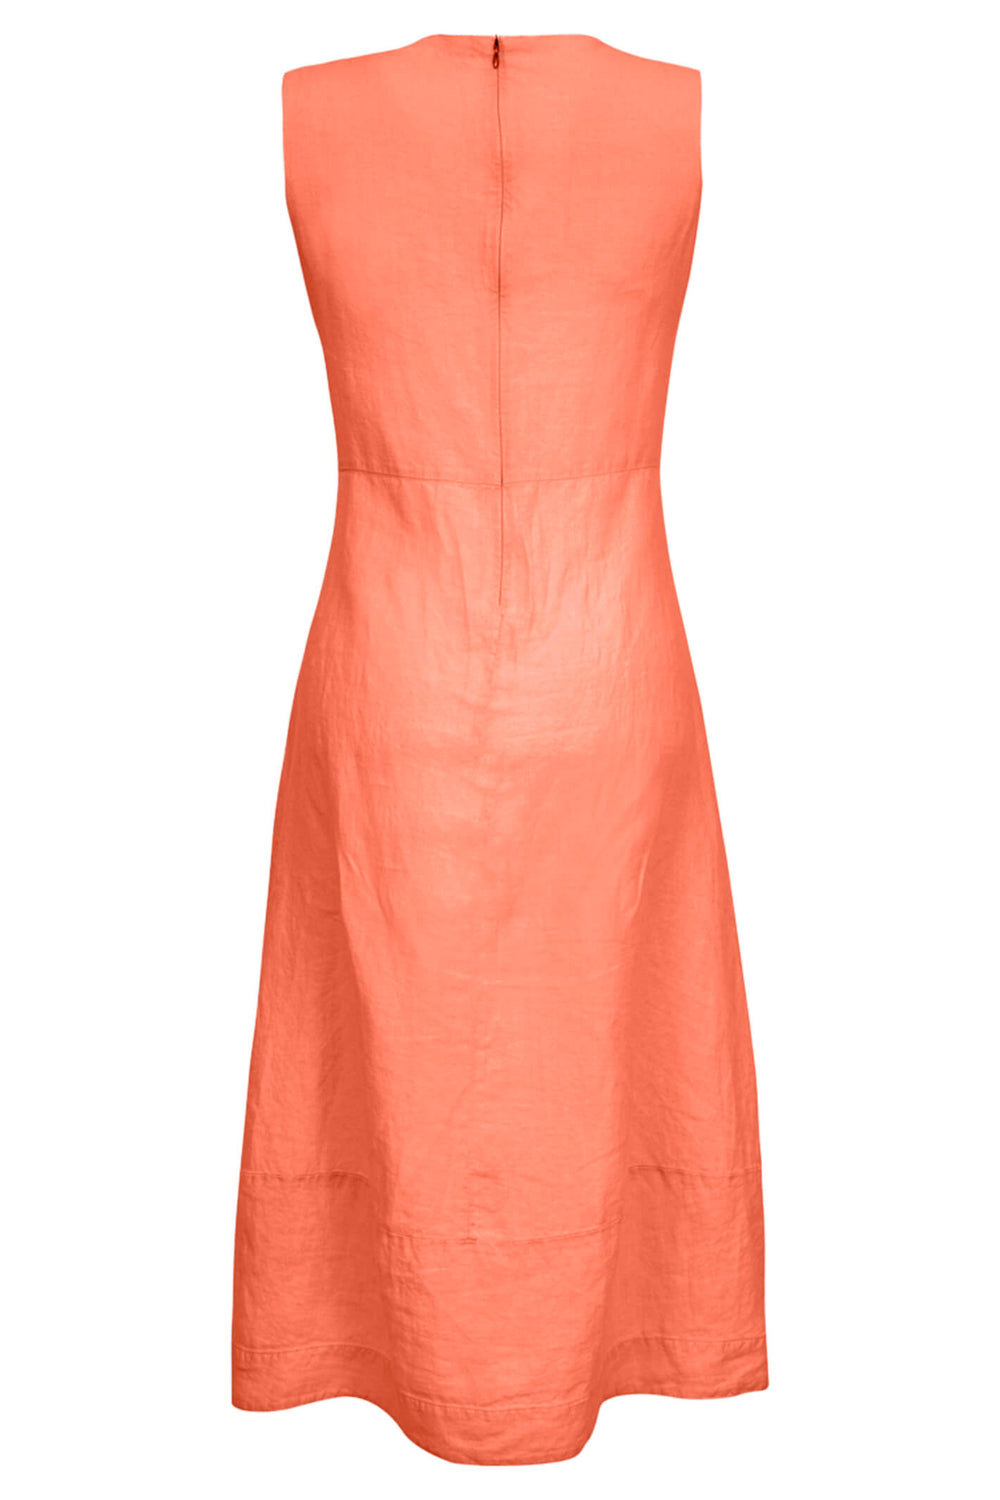 Dolcezza 23165 Orange Dress - Experience Boutique